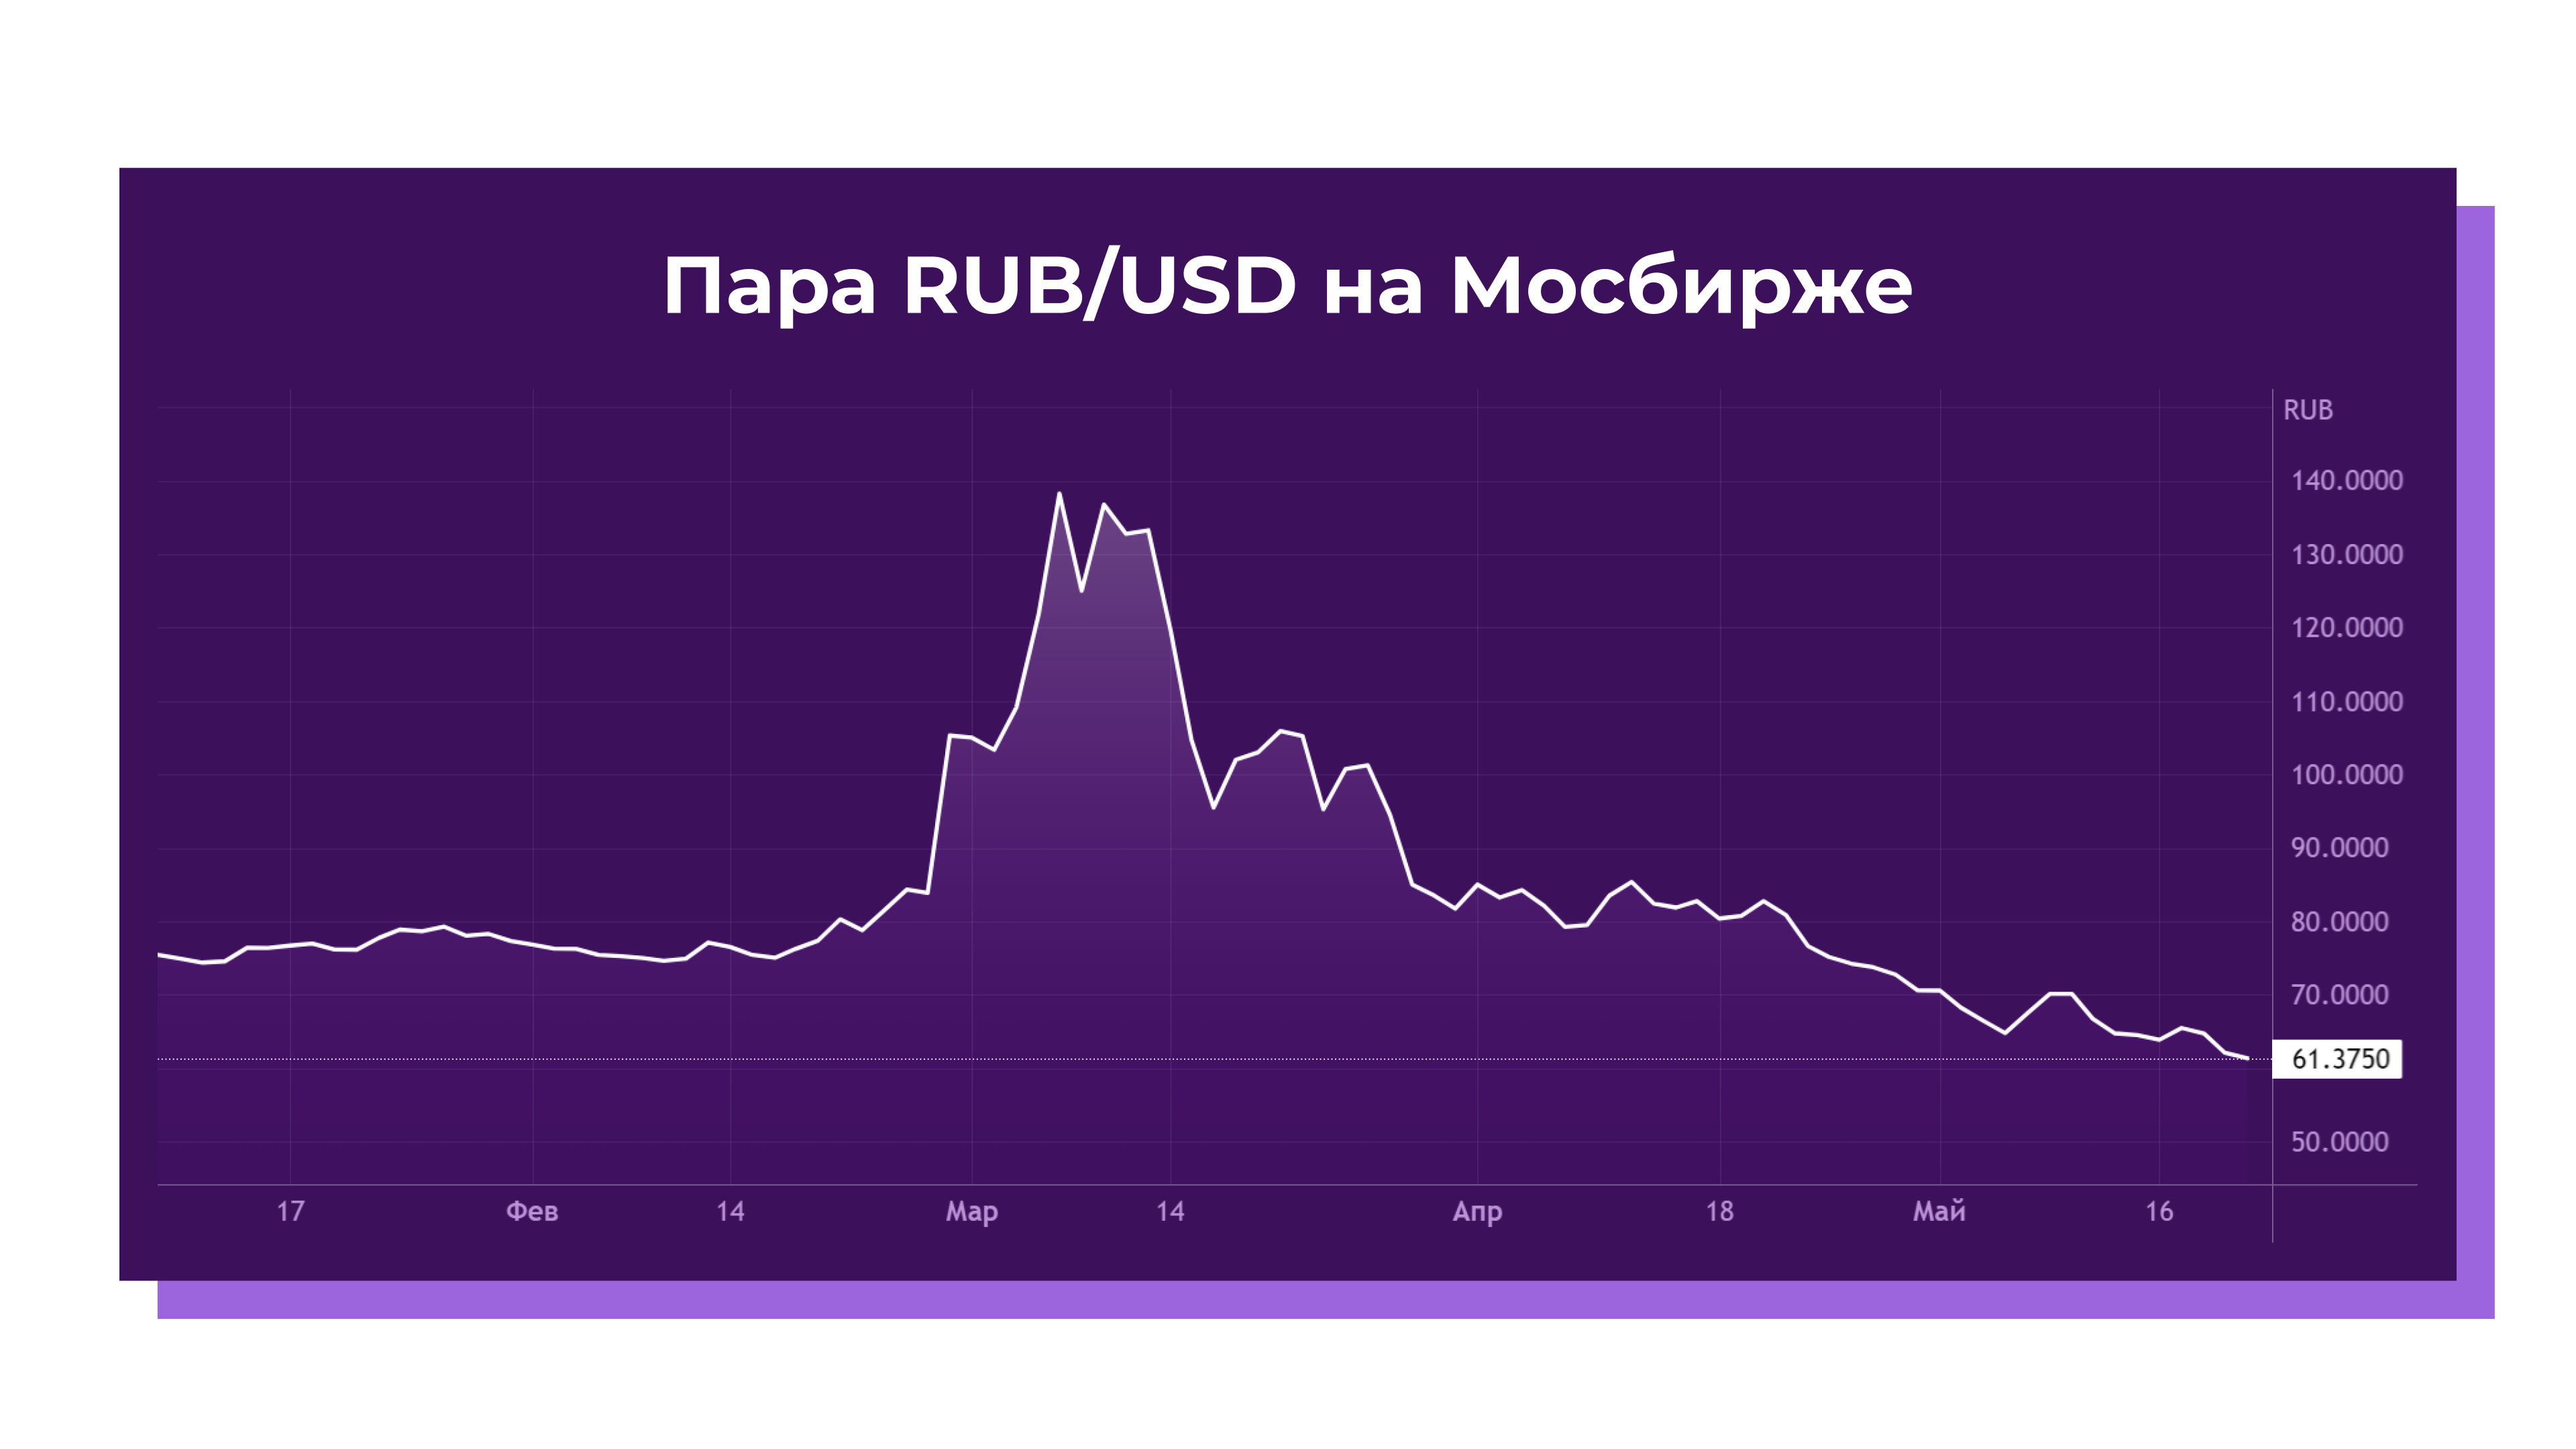 Пара RUB/USD на Мосбирже